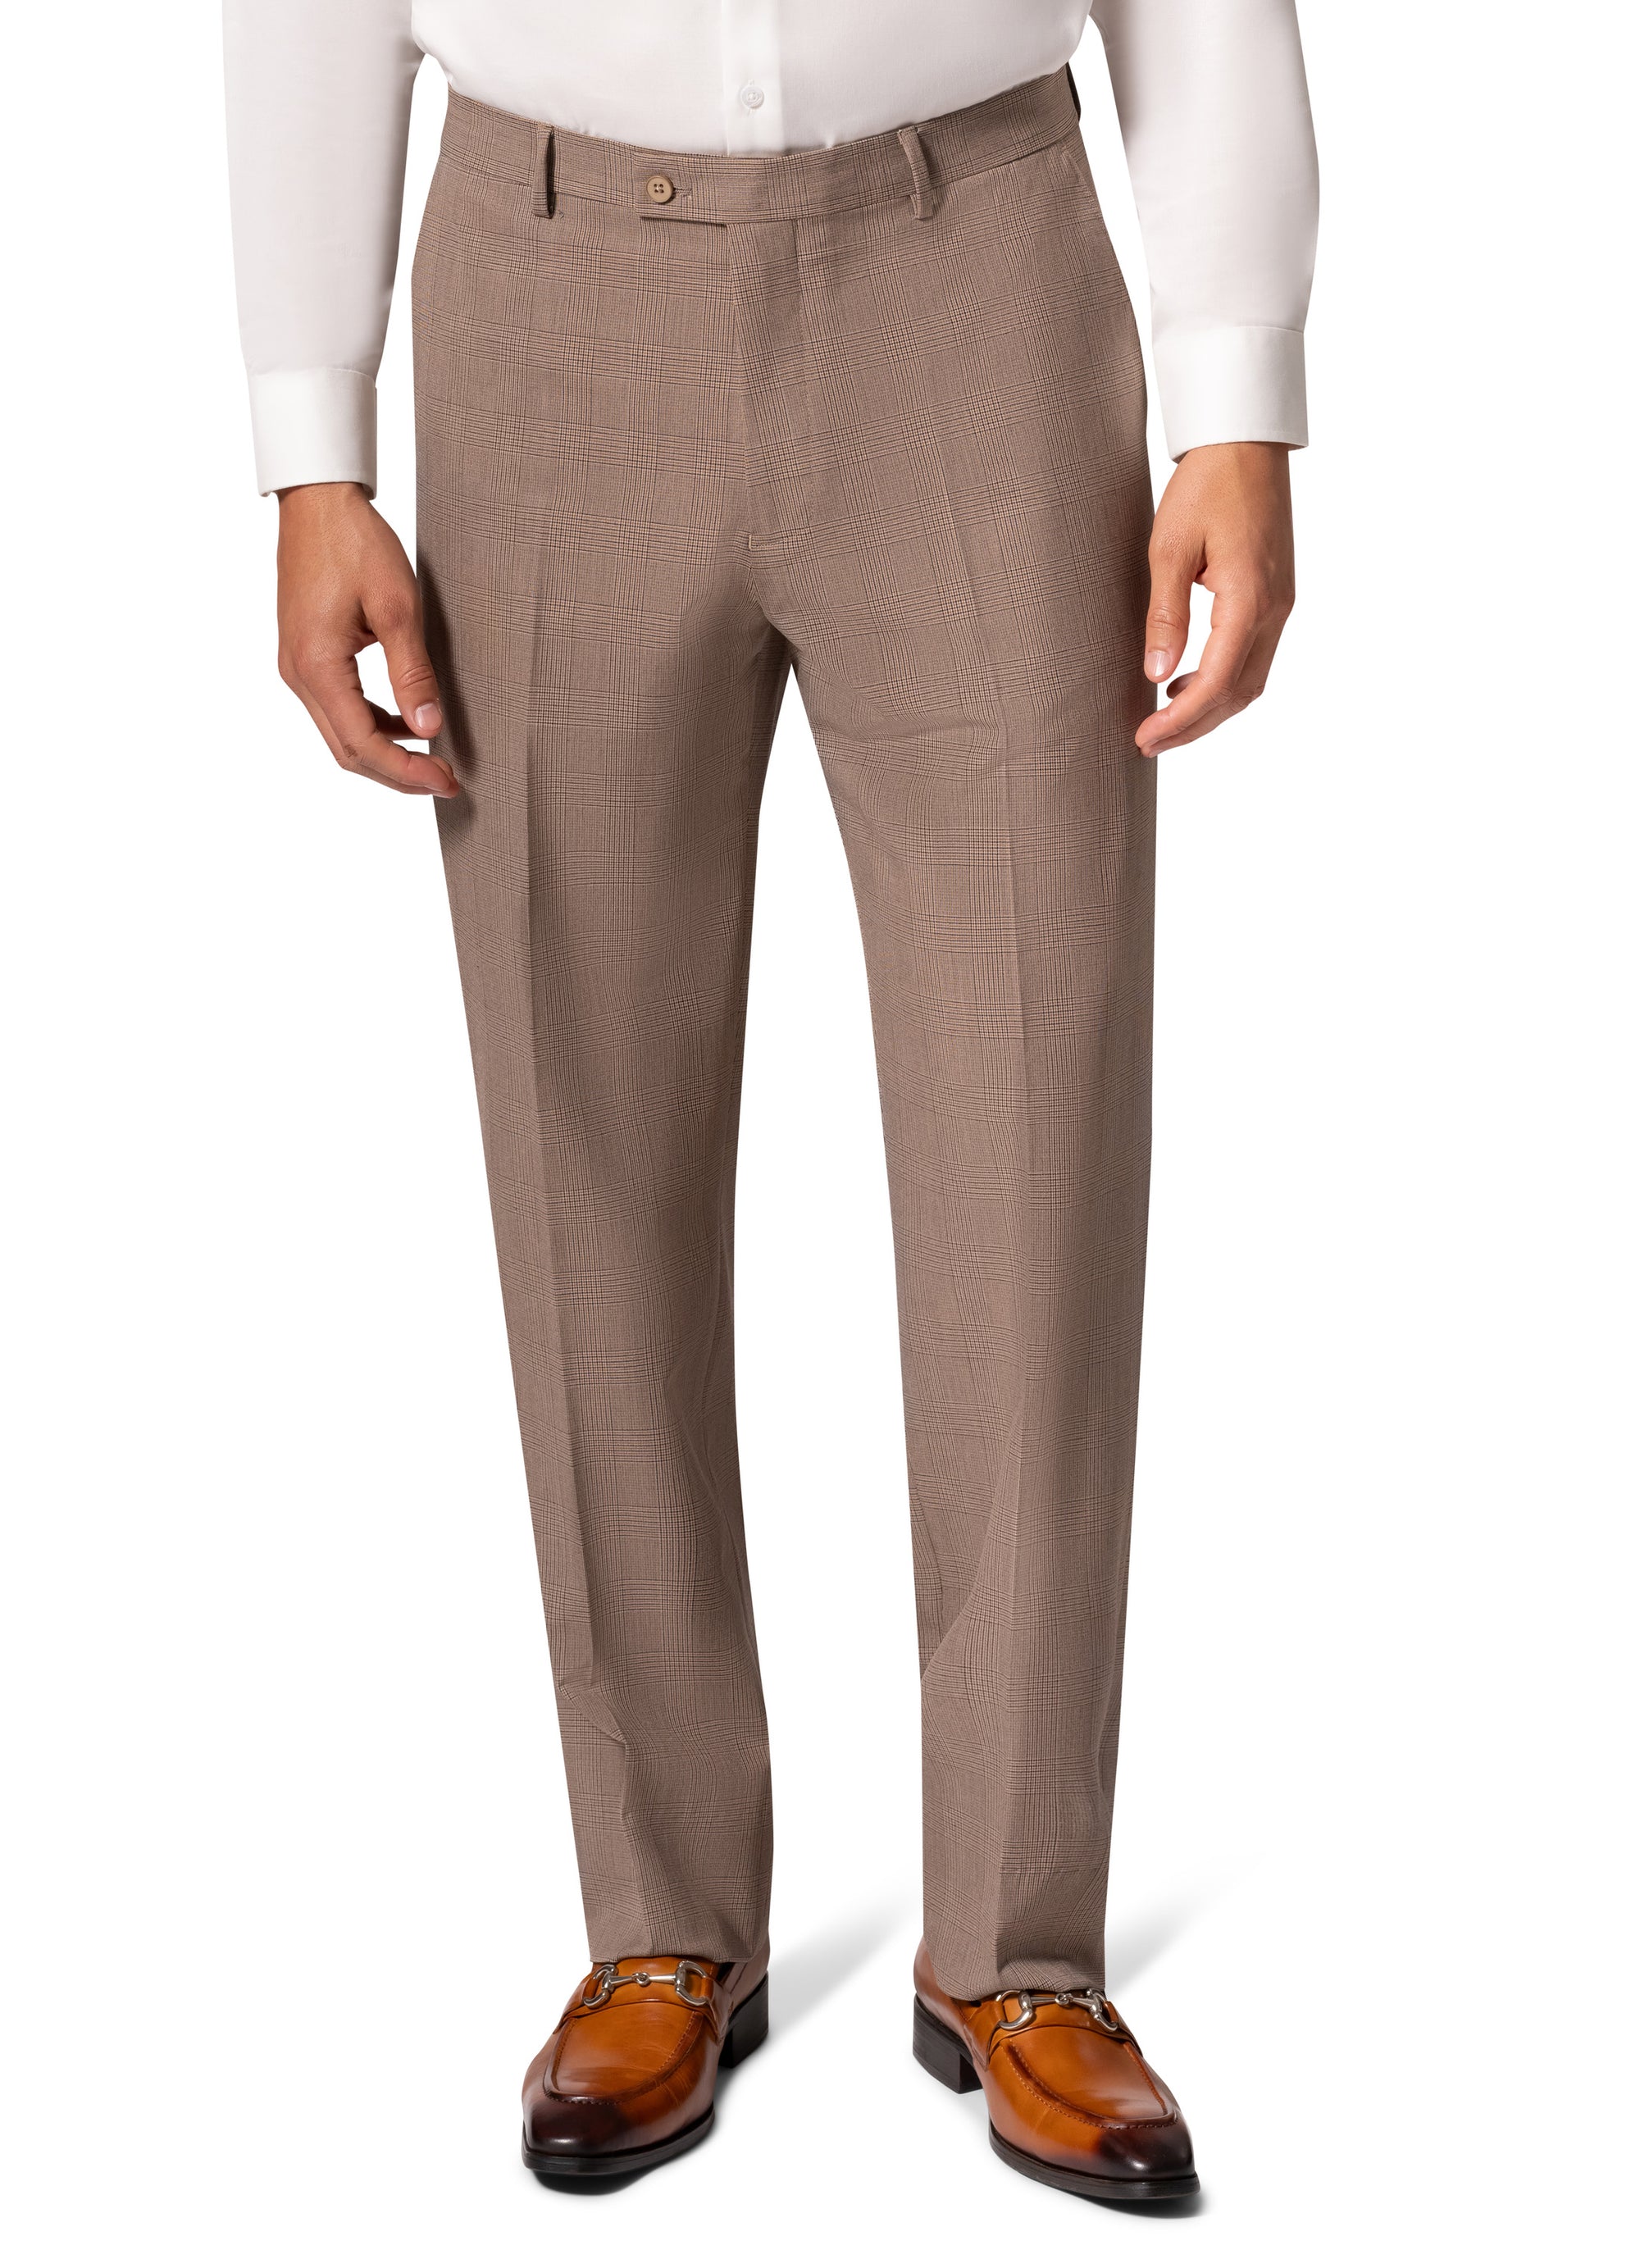 Berragamo BP04KE-07 3PC Notch Slim Suit - Tan